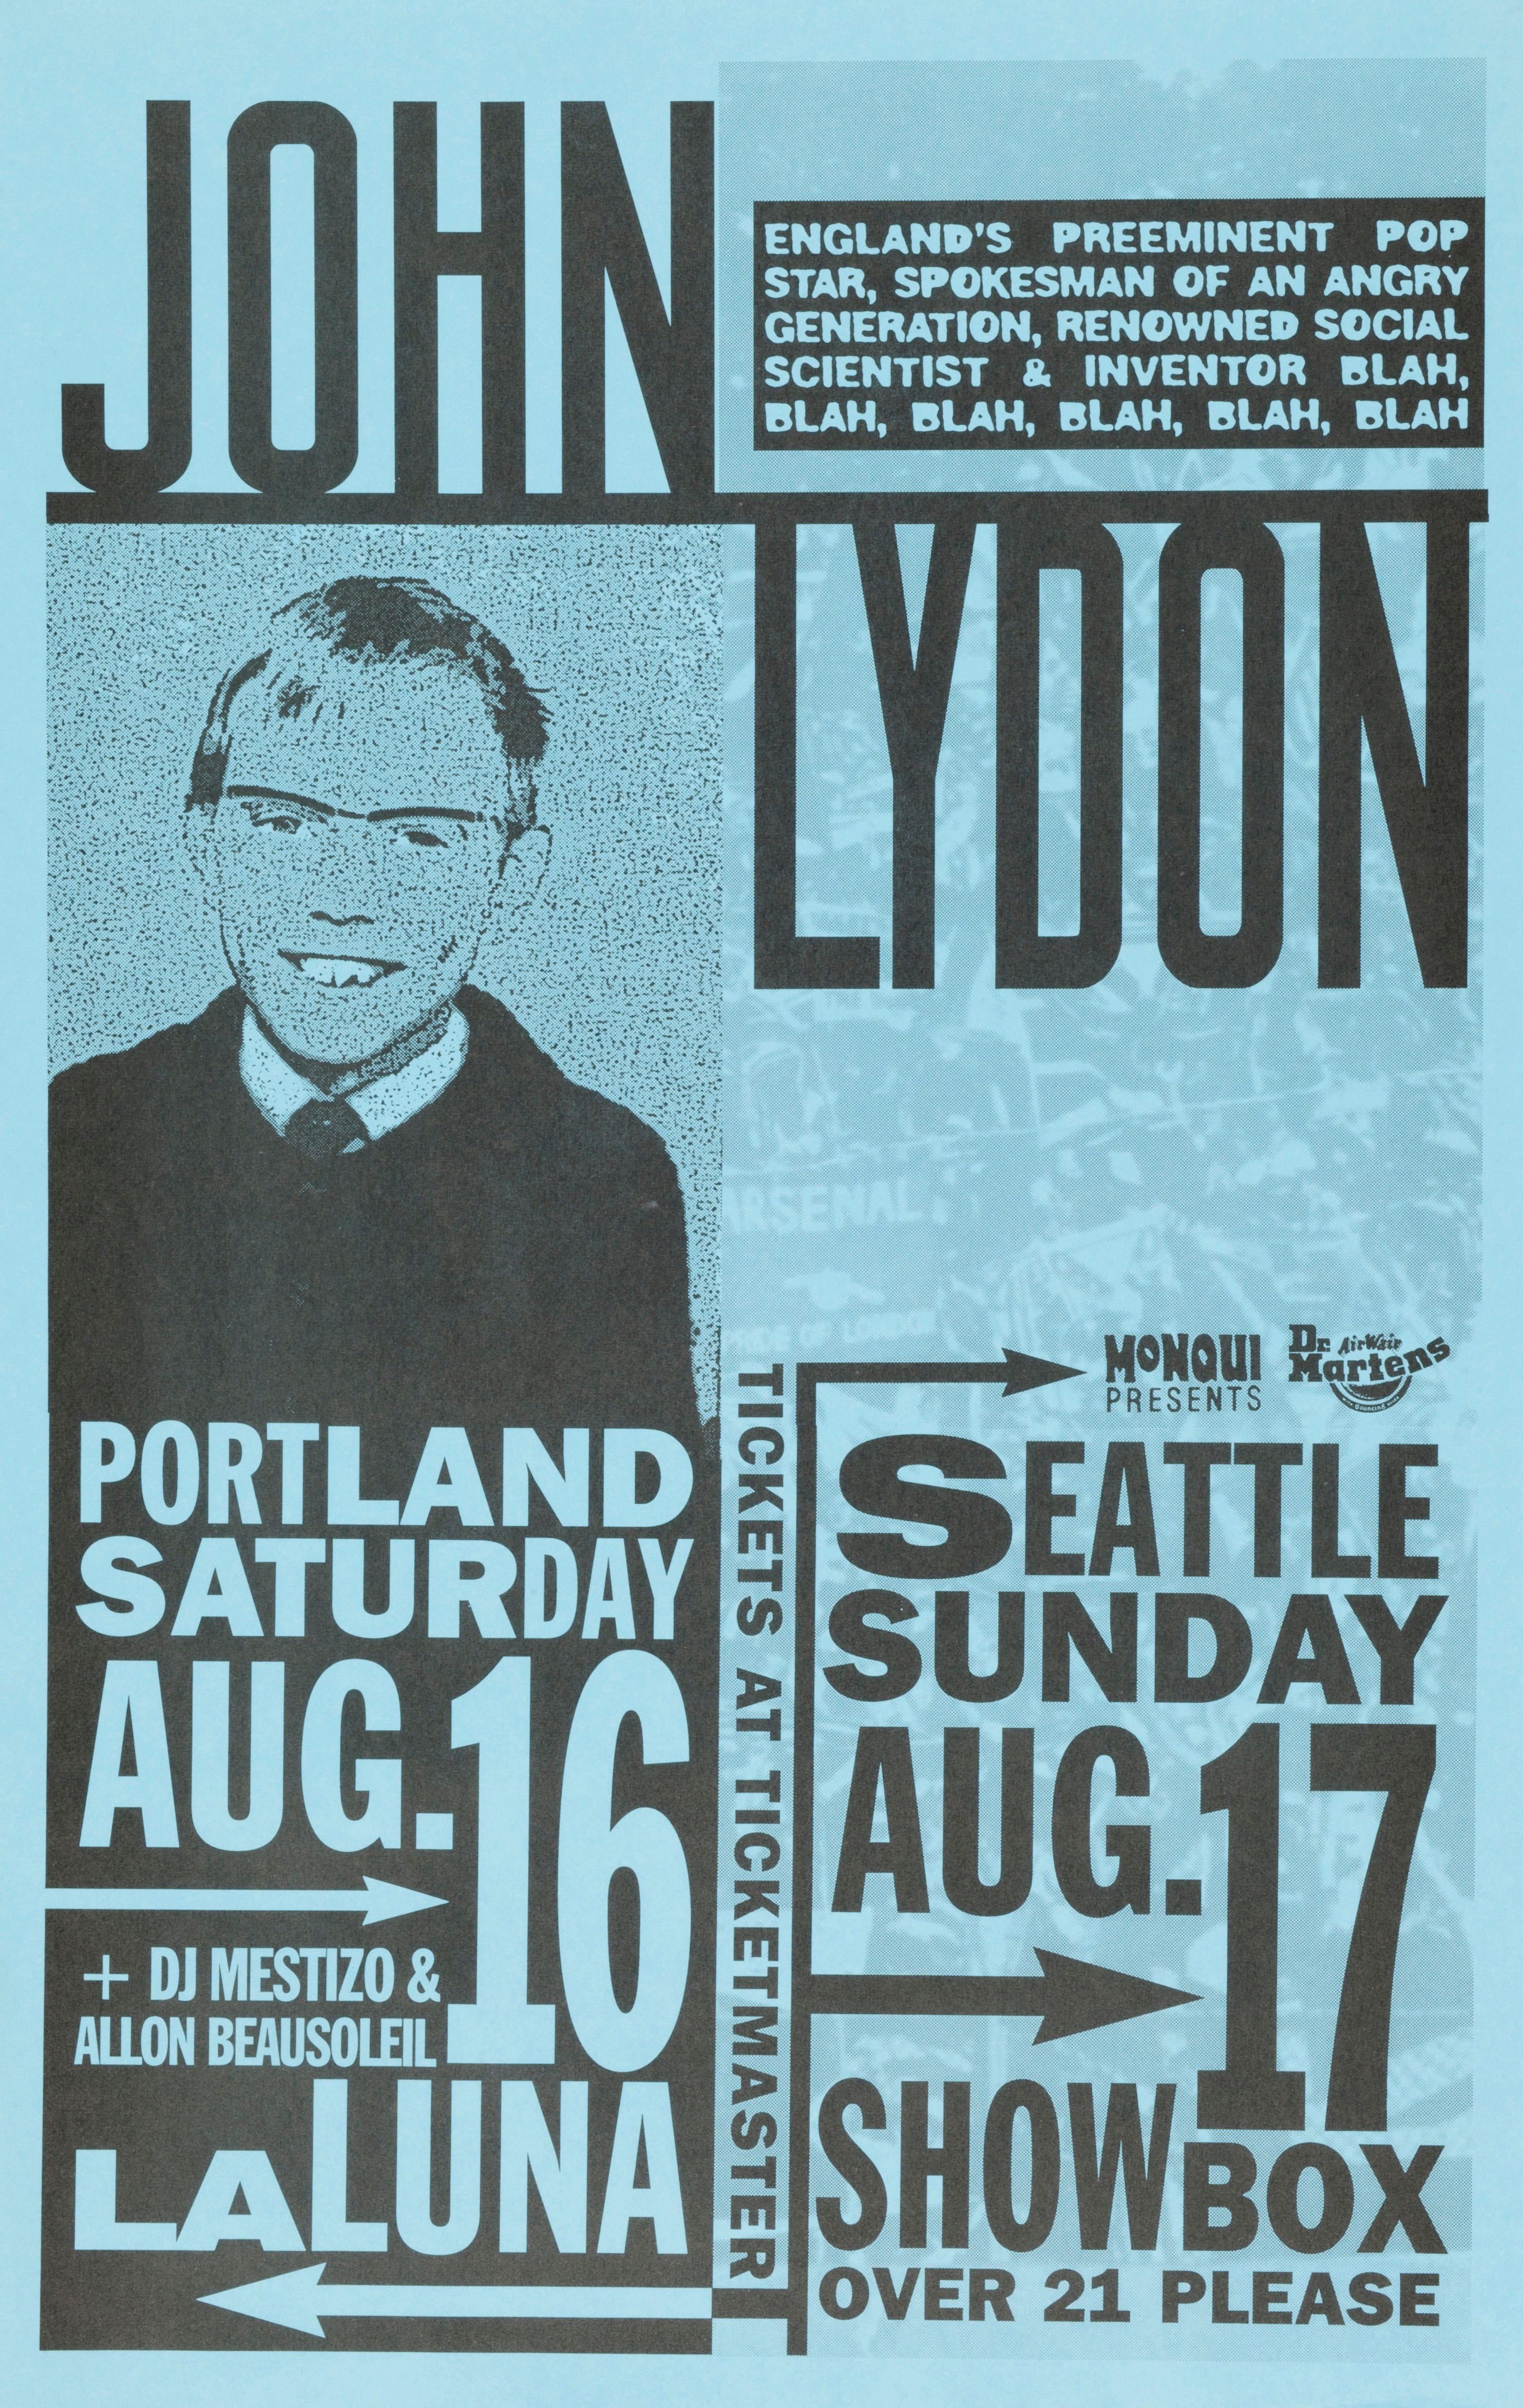 MXP-53.5 John Lydon 1997 La Luna/showbox  Aug 17 Concert Poster